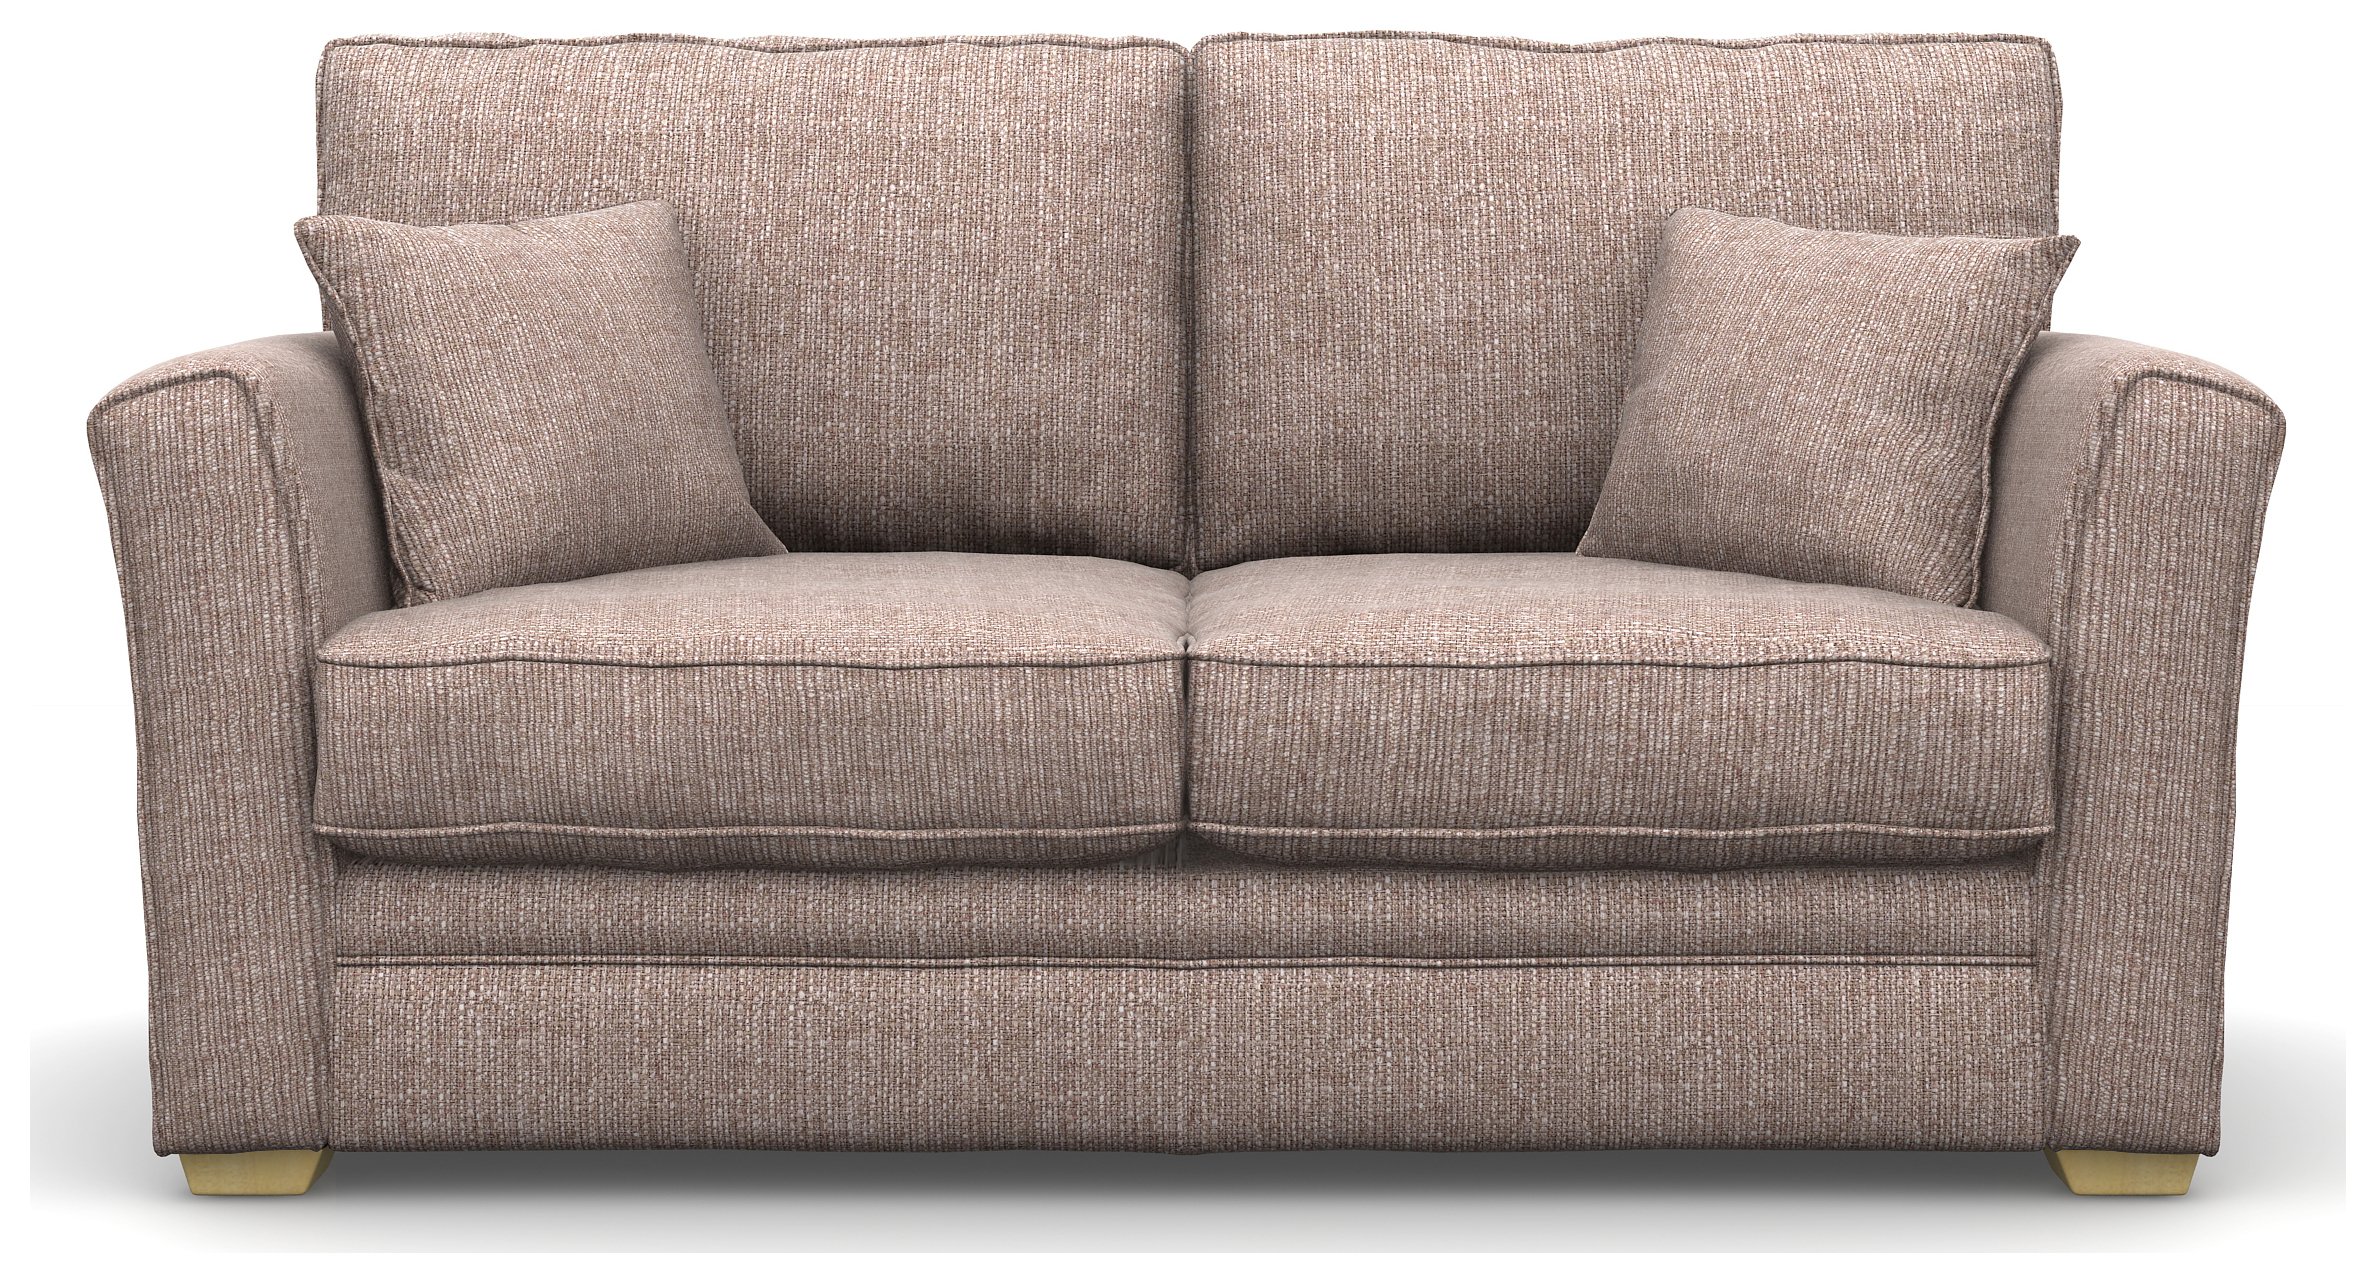 conran malton sofa bed